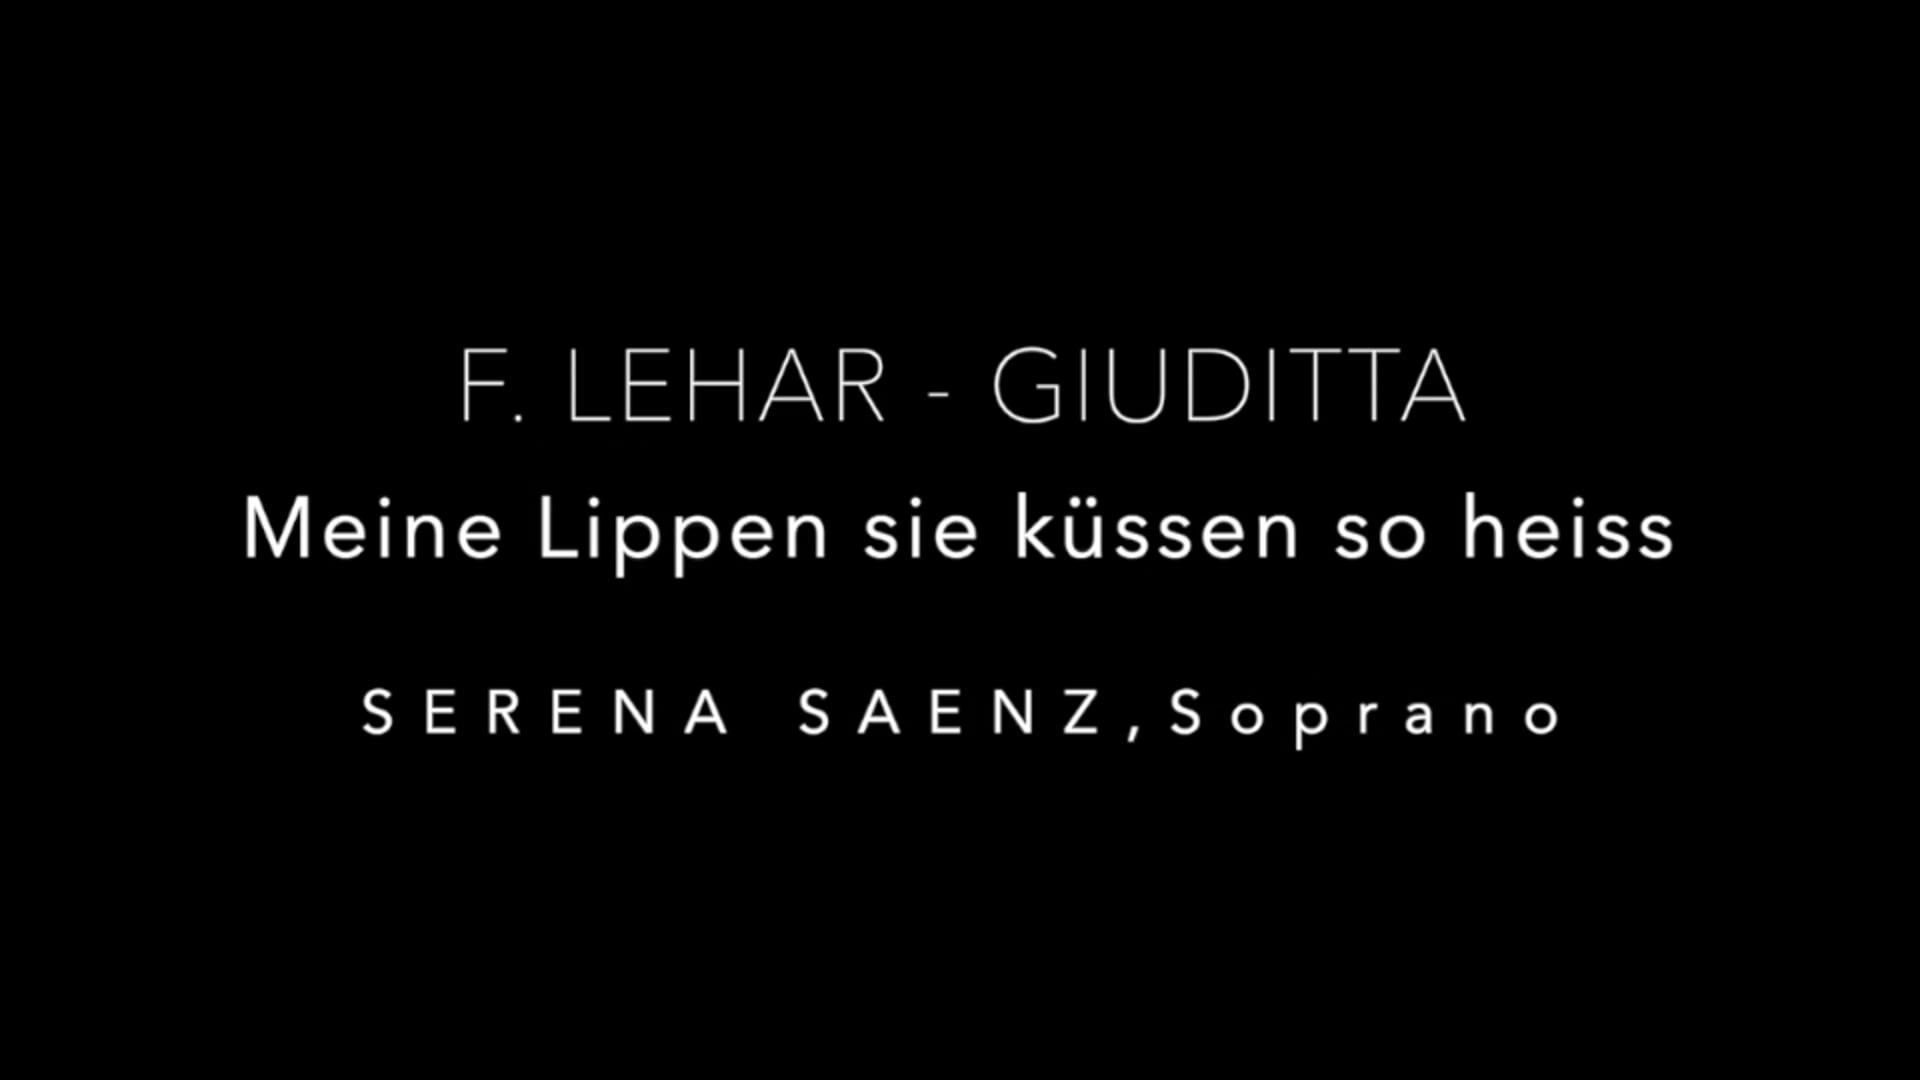 Serena Sáenz: 'Meine Lippen' (LEHAR - Giuditta)